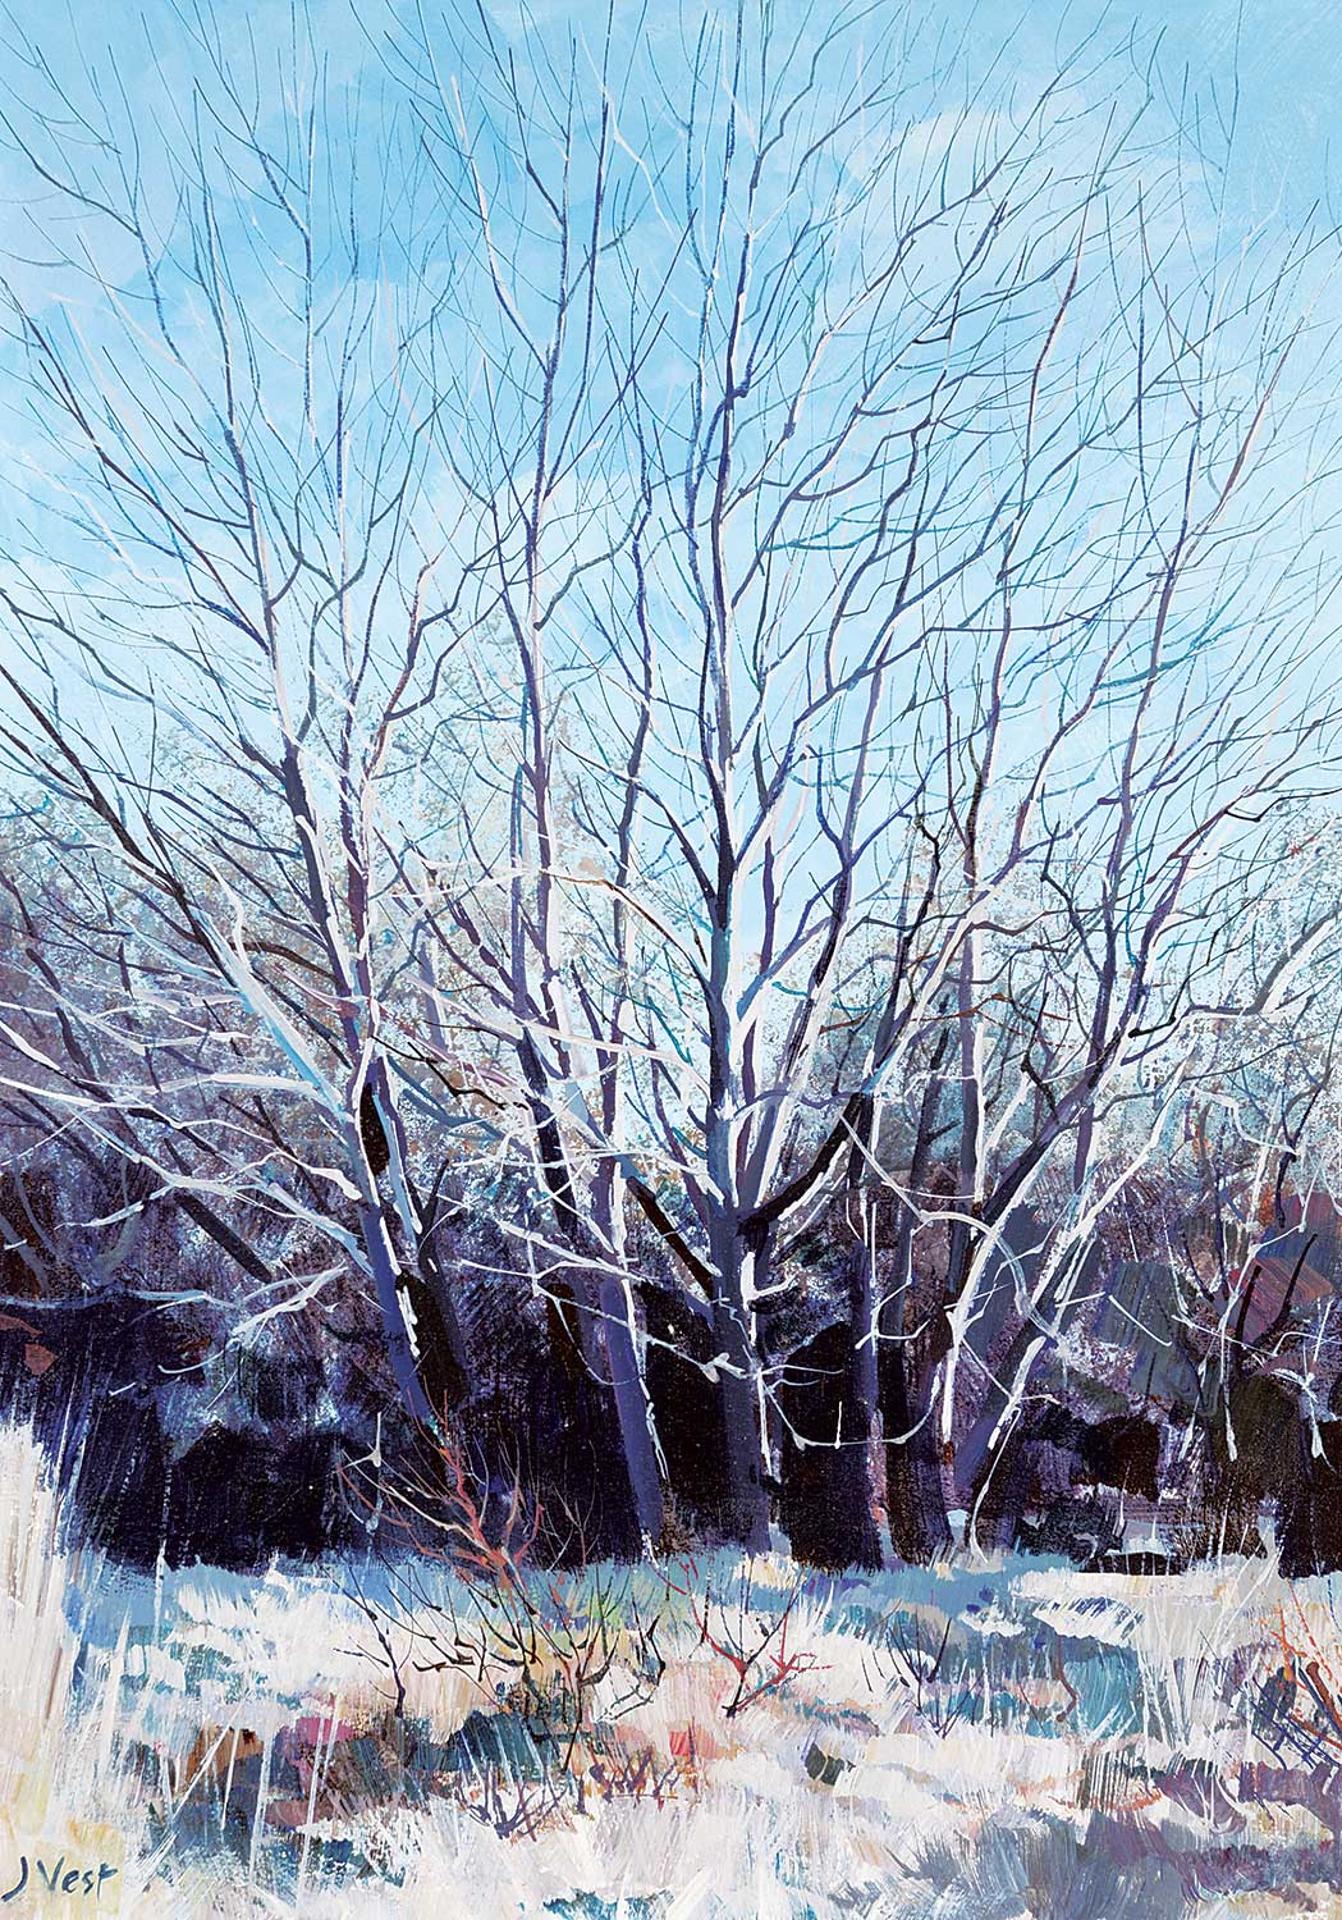 Jim Vest (1939) - Untitled - Winter Trees